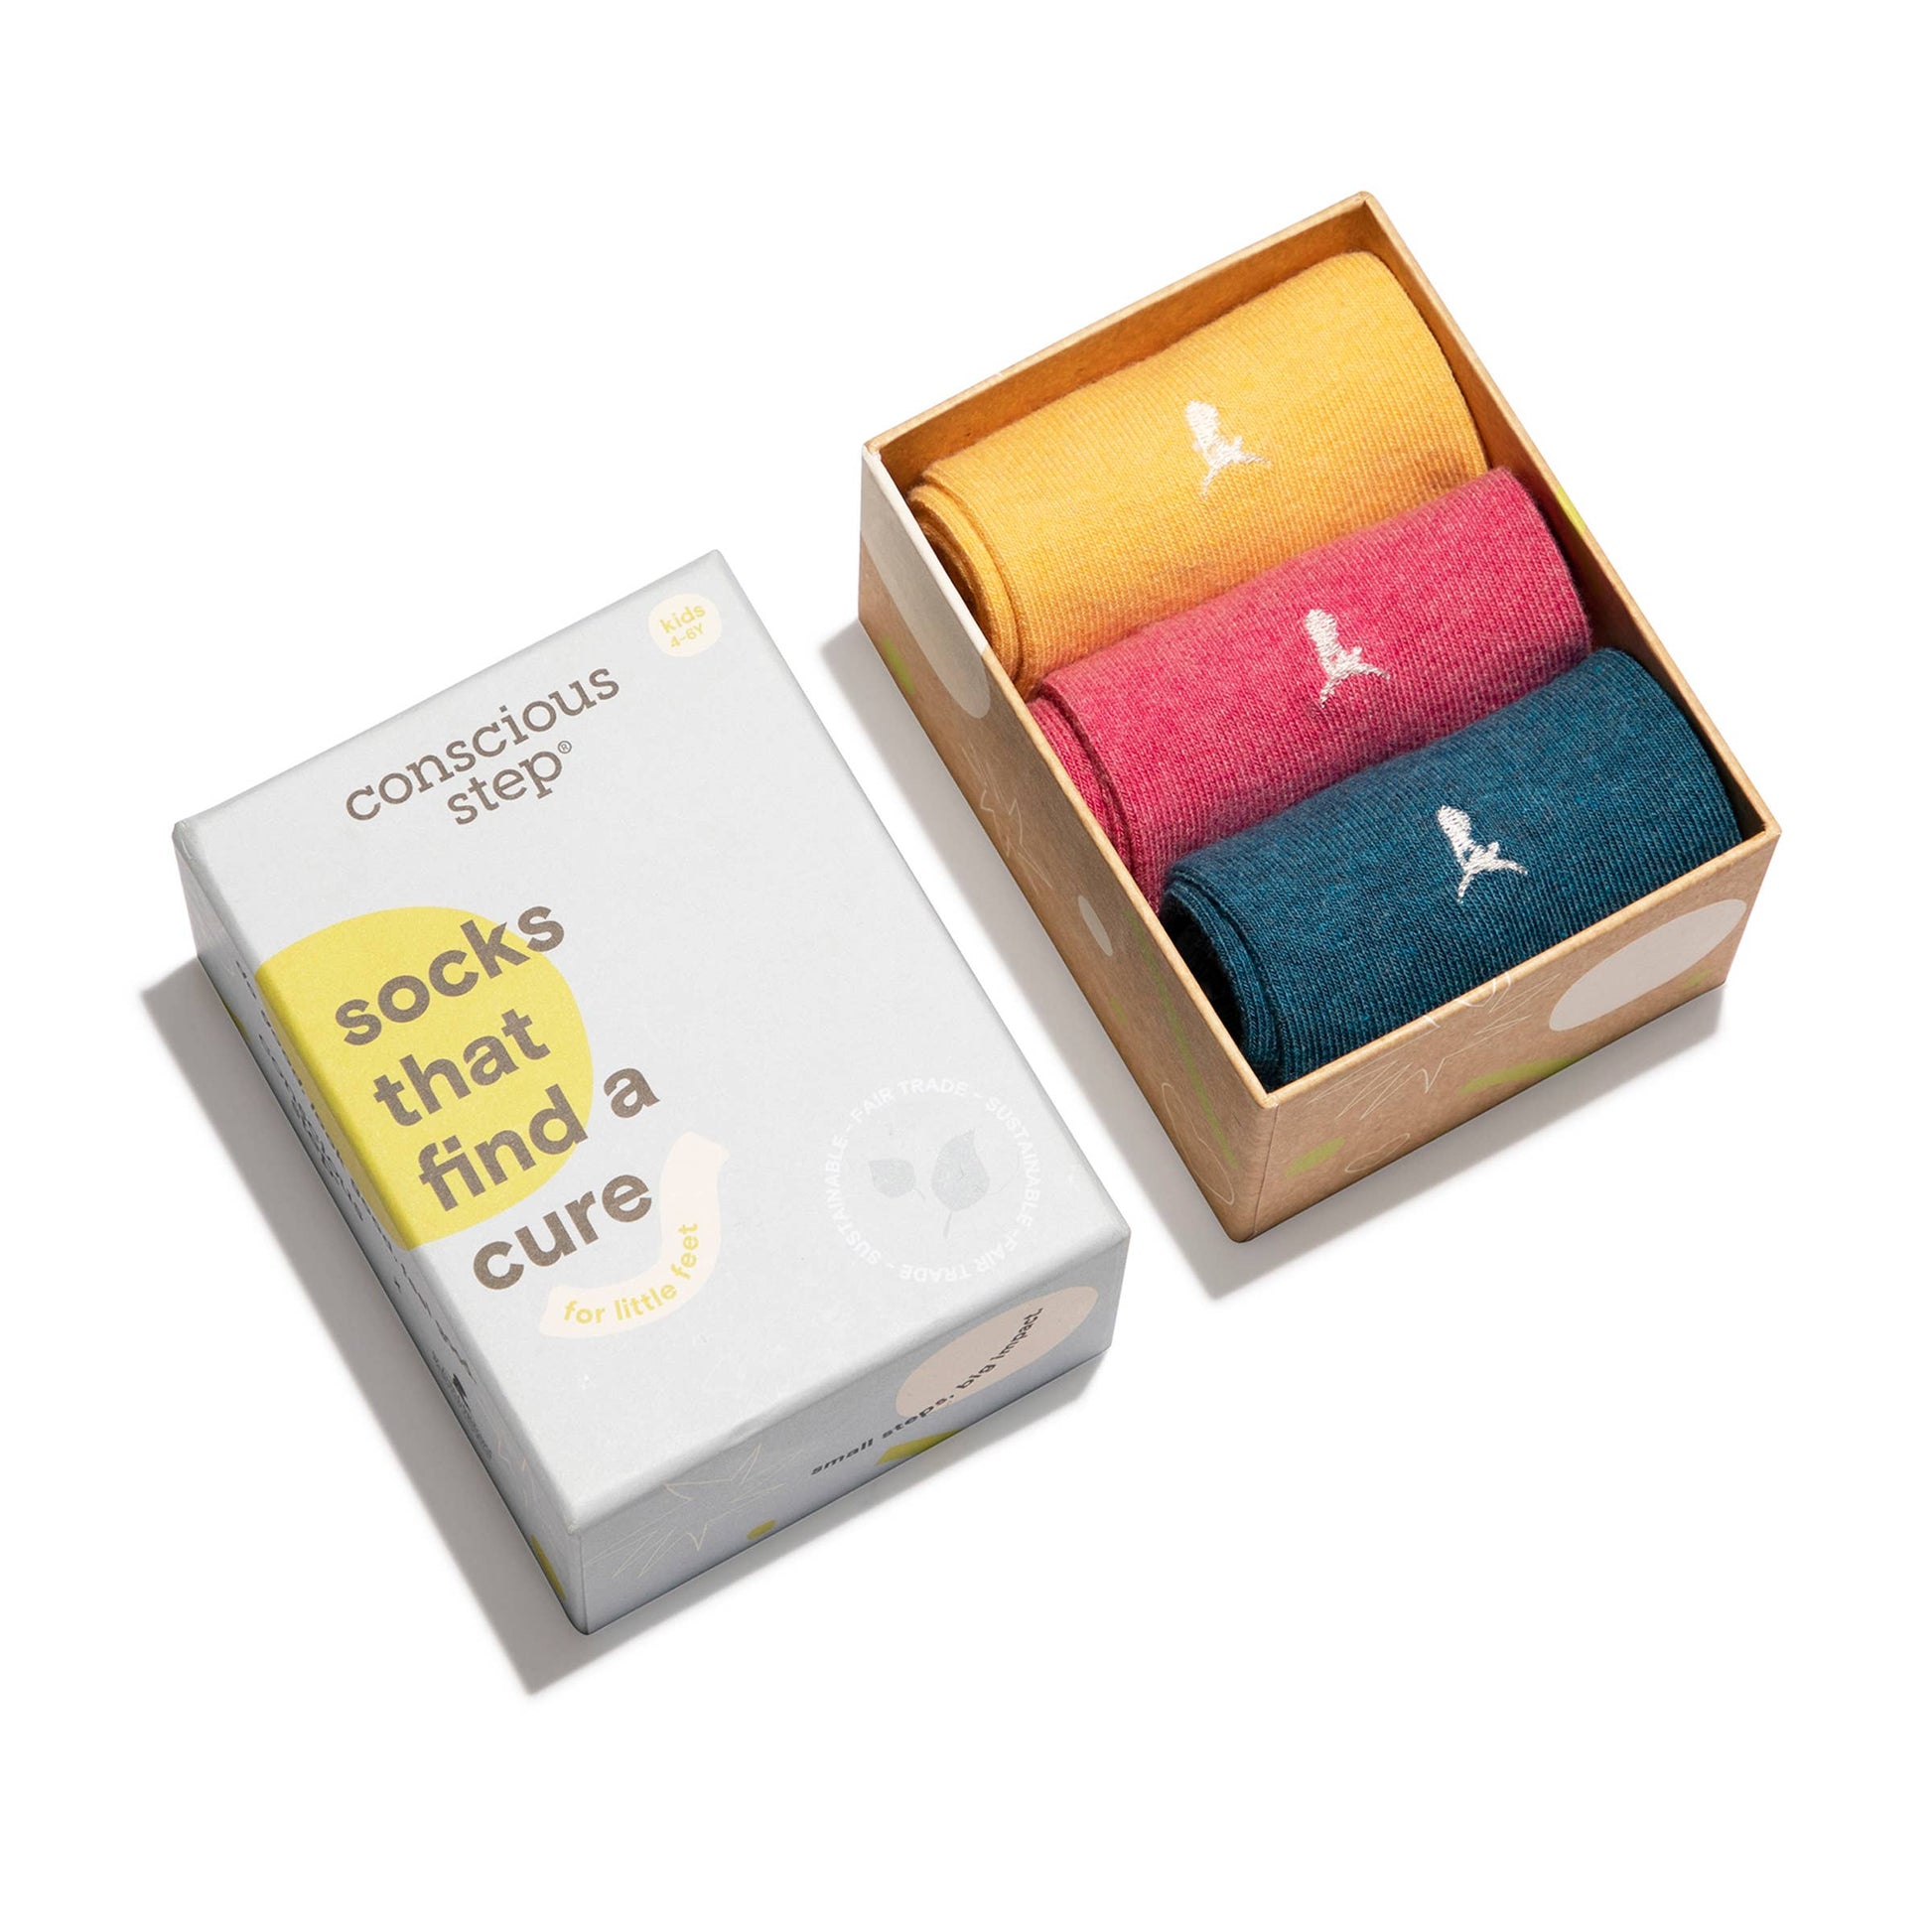 kids socks that find a cure box set